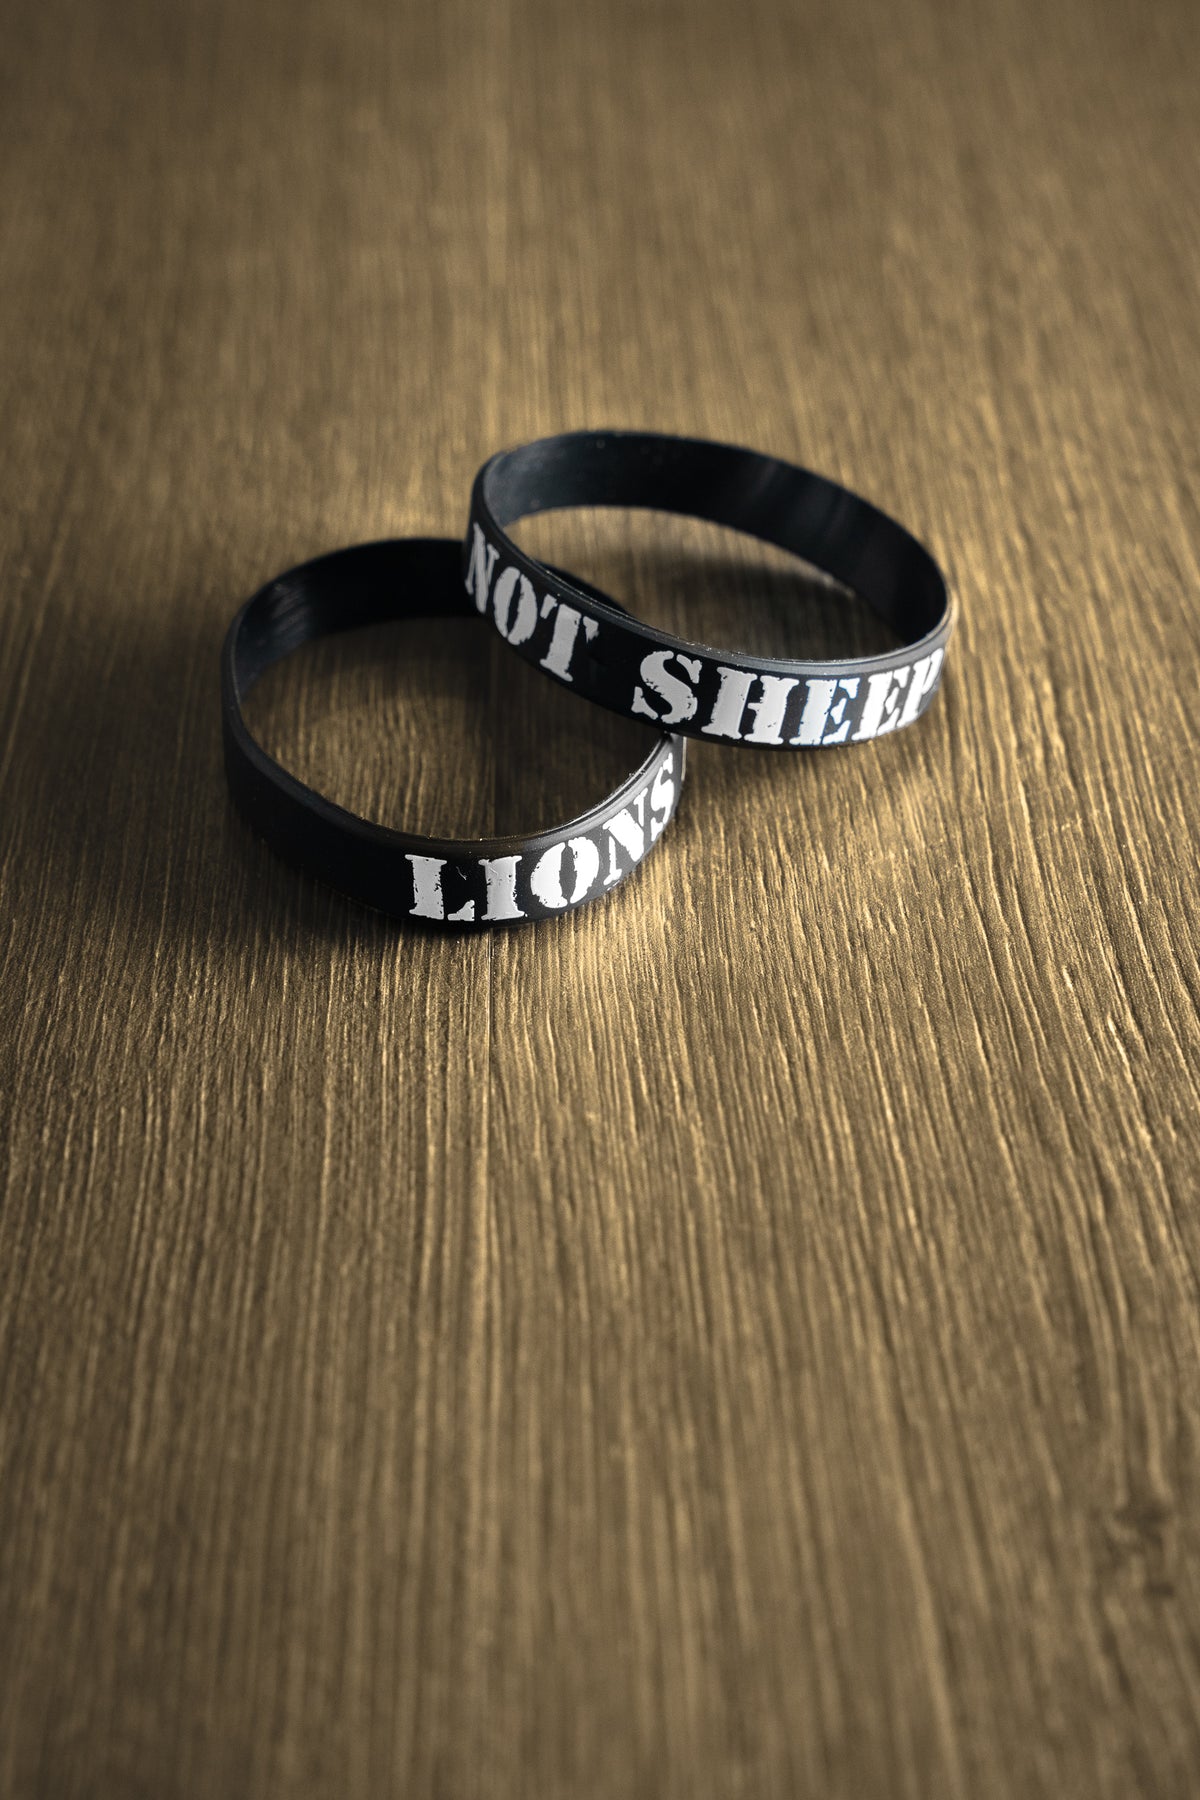 Lions Not Sheep &quot;OG&quot; Wristband - Lions Not Sheep ®